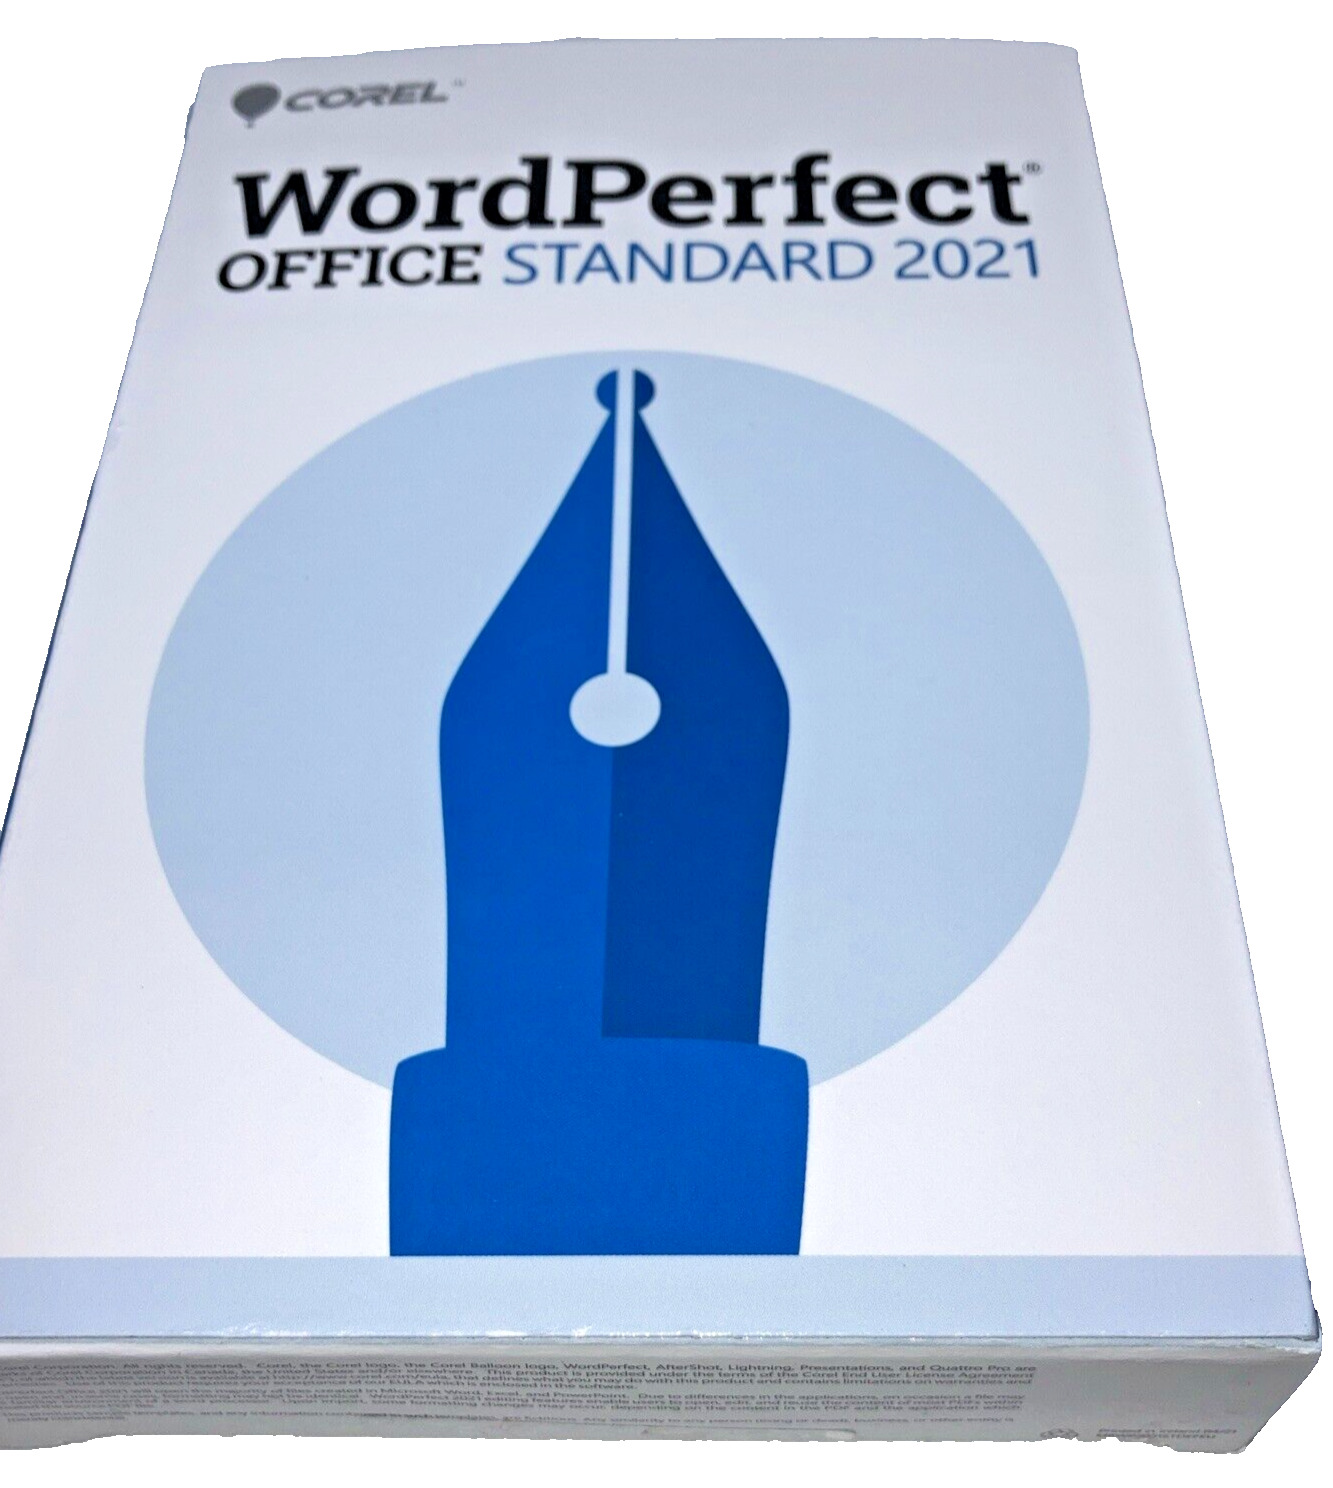 Corel WordPerfect Office standard 2021 windows 7, 8.1, 10 fonts temples clipart